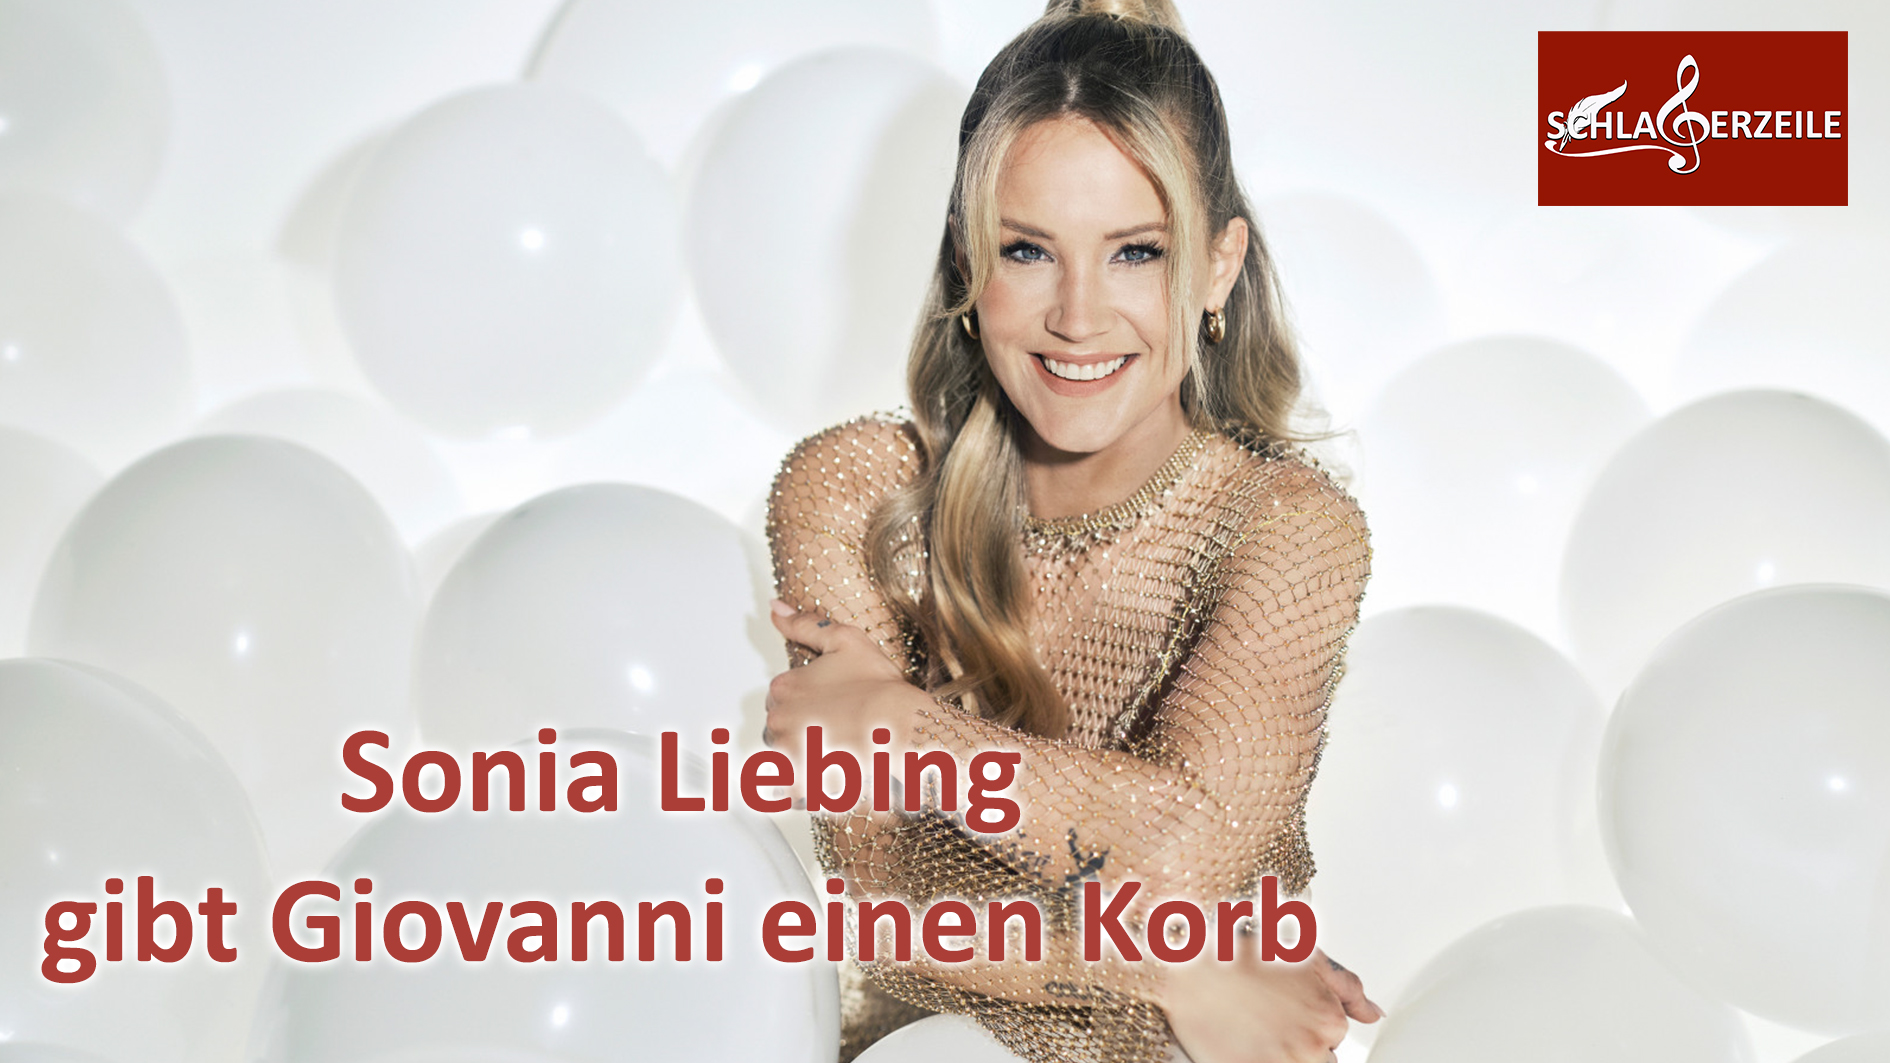 Sonia Liebing, Zarrella Show